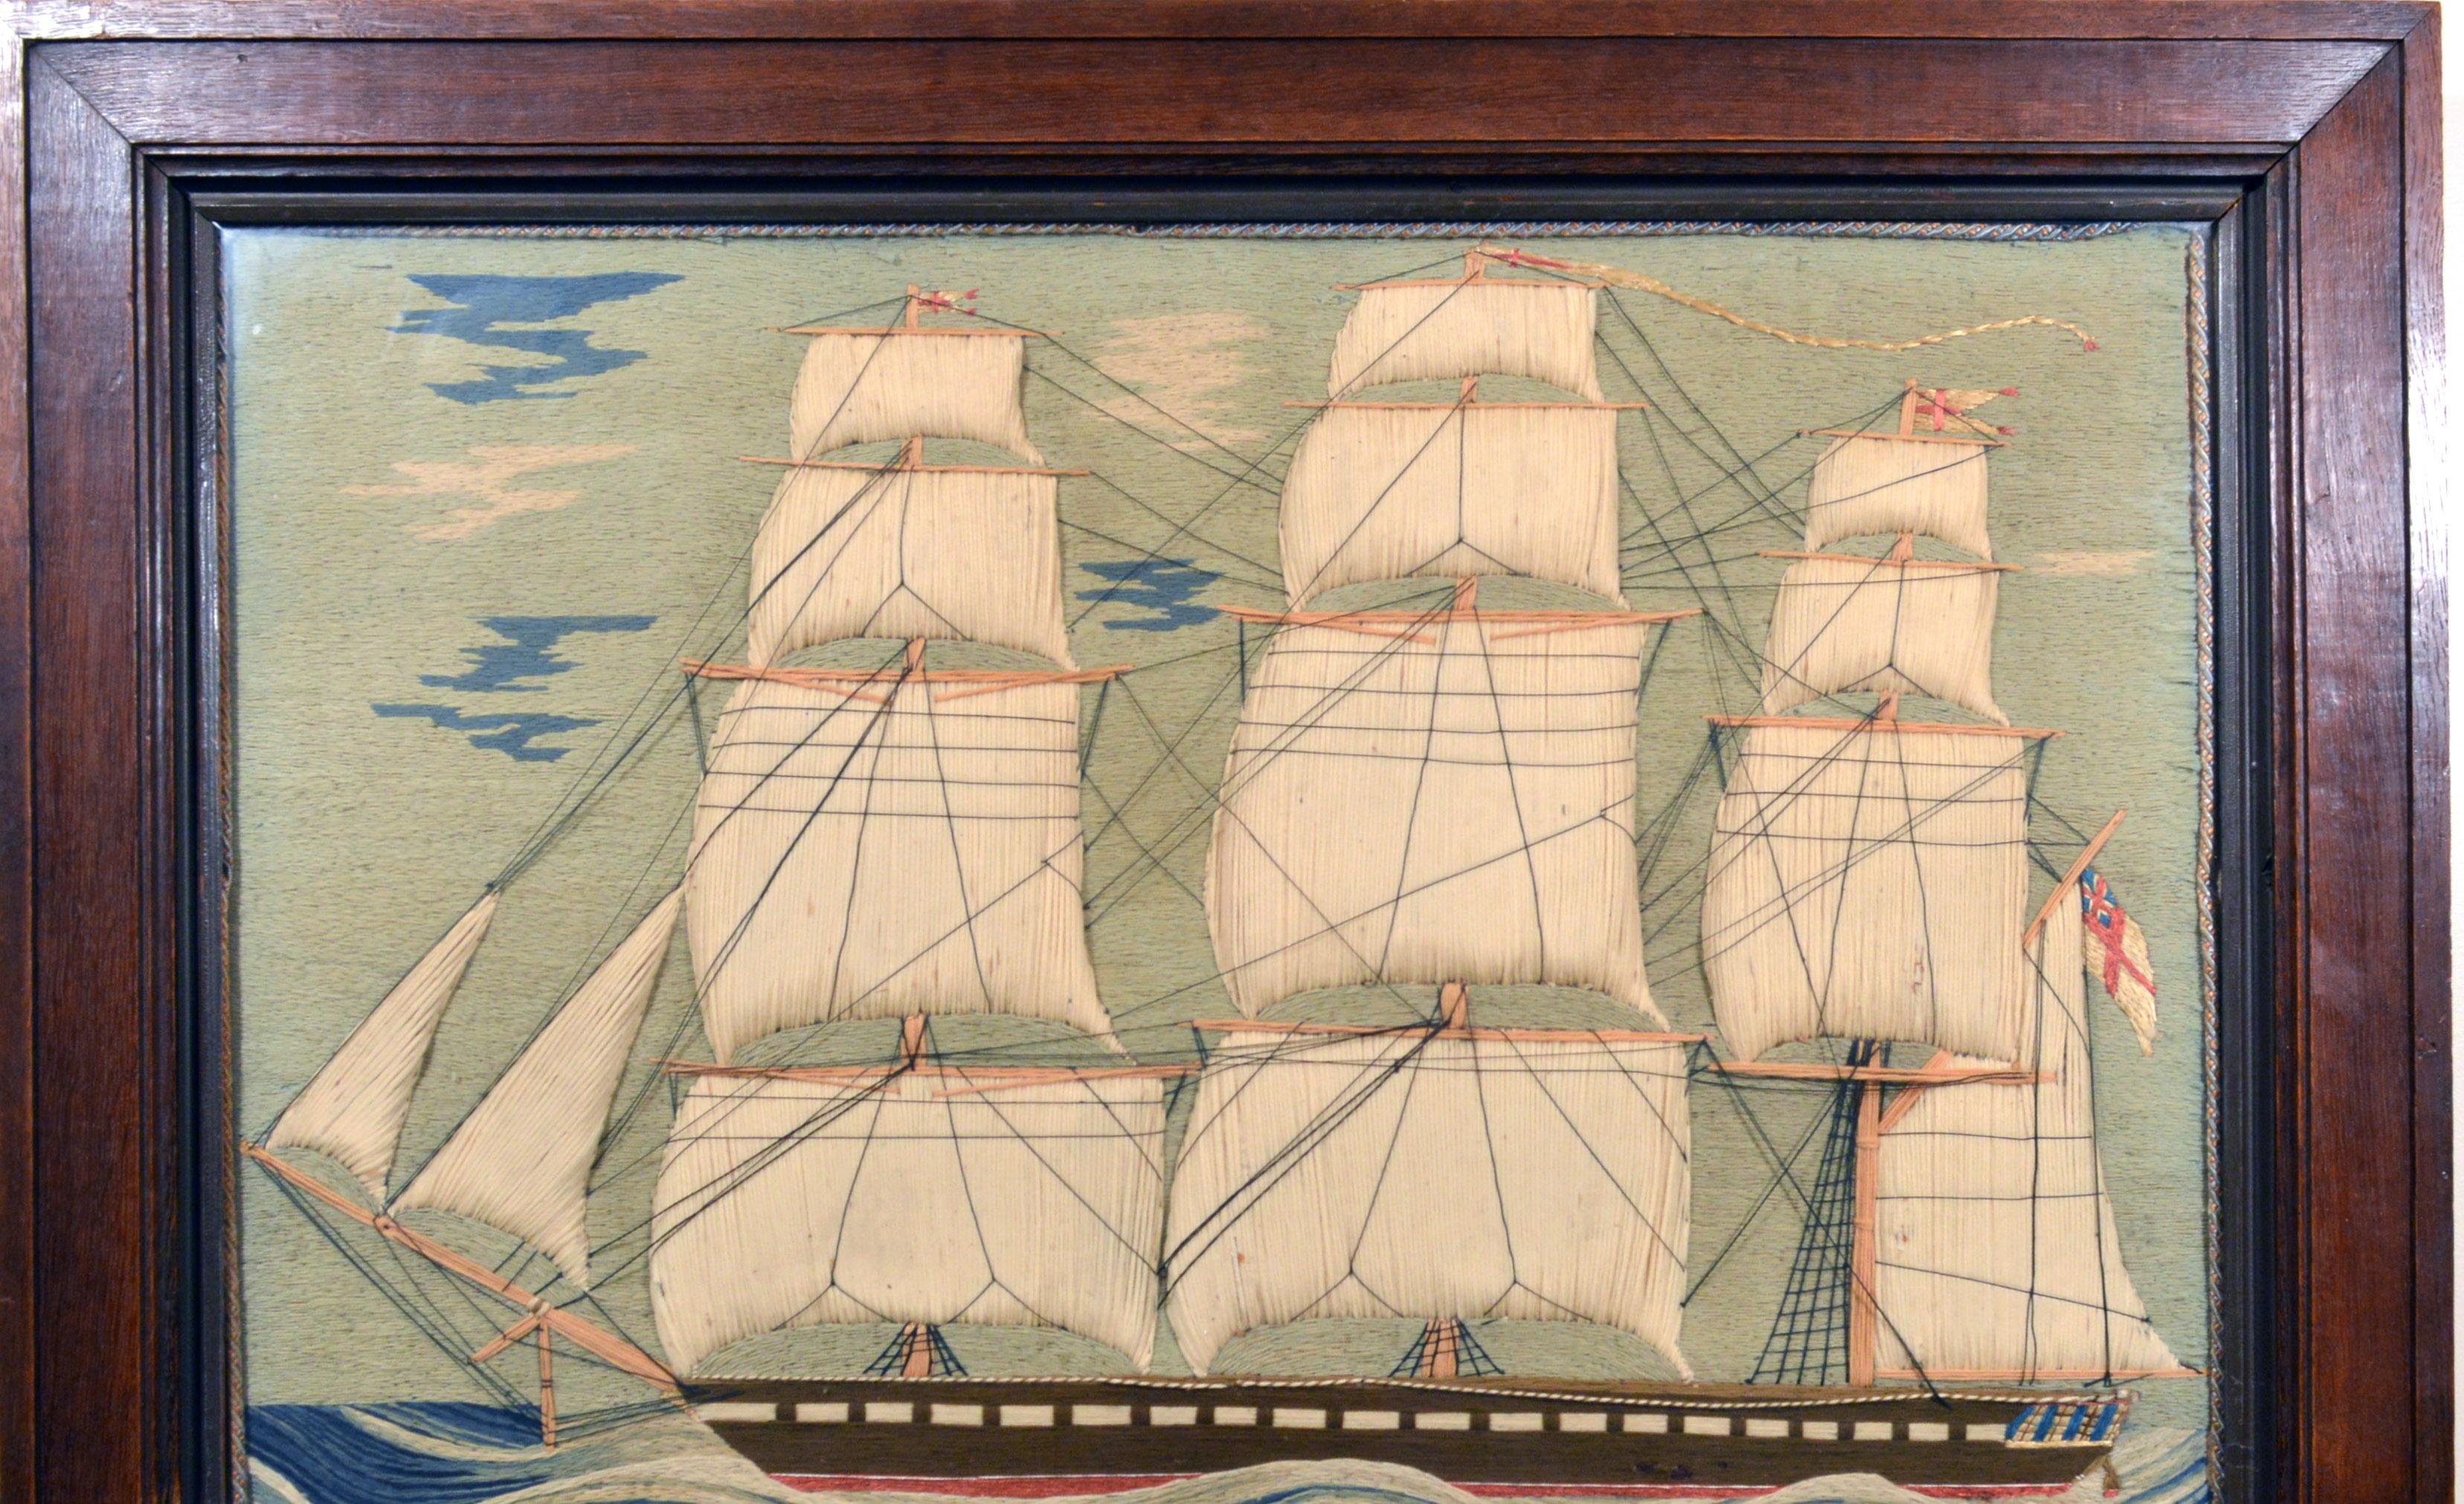 English British Sailor's Woolie of a Royal Navy Ship with an Unusual Sea circa 1865-1885